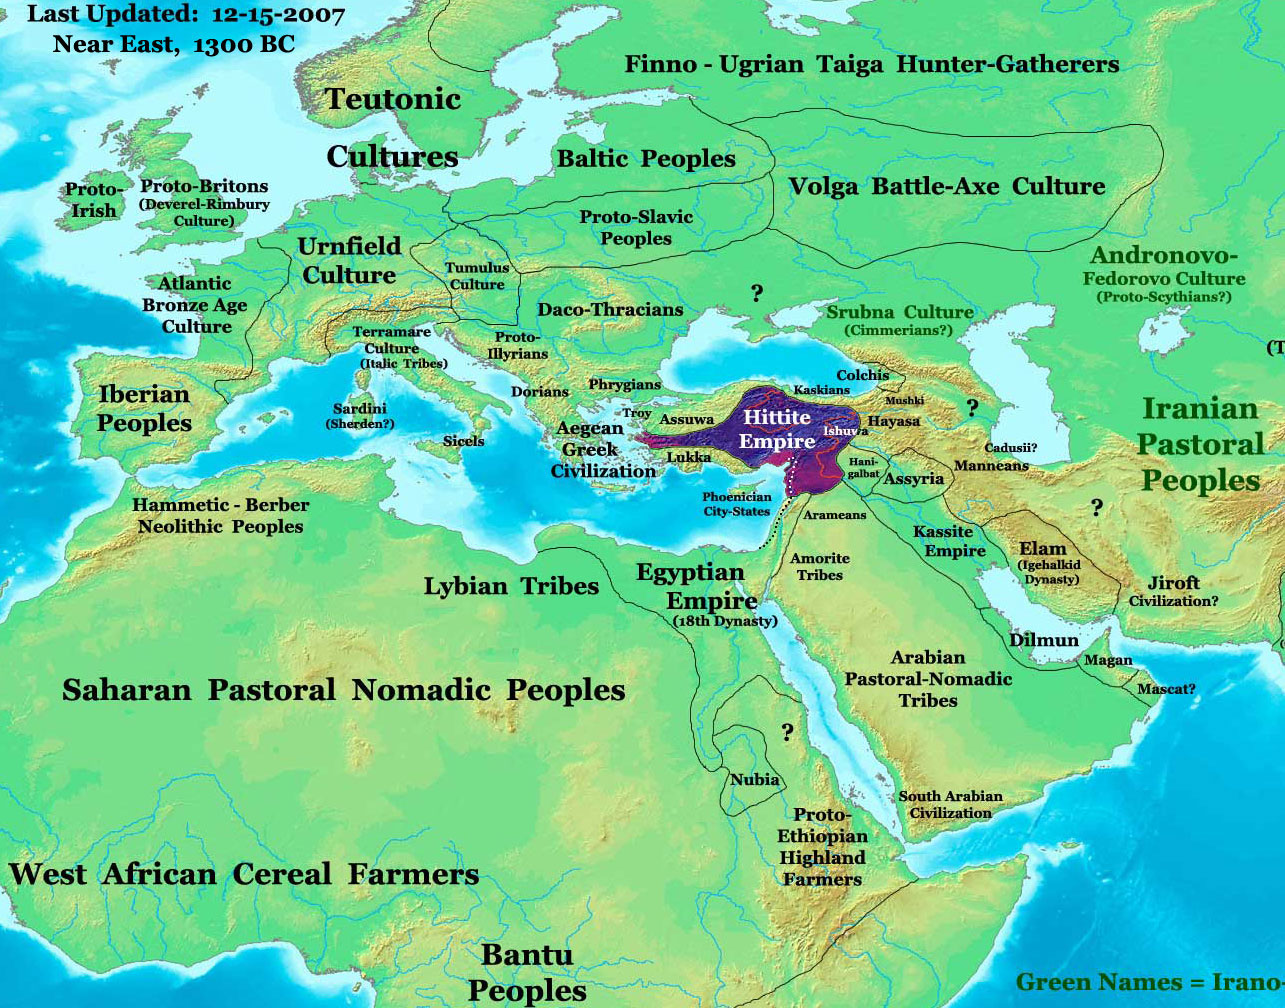 sumer on world map